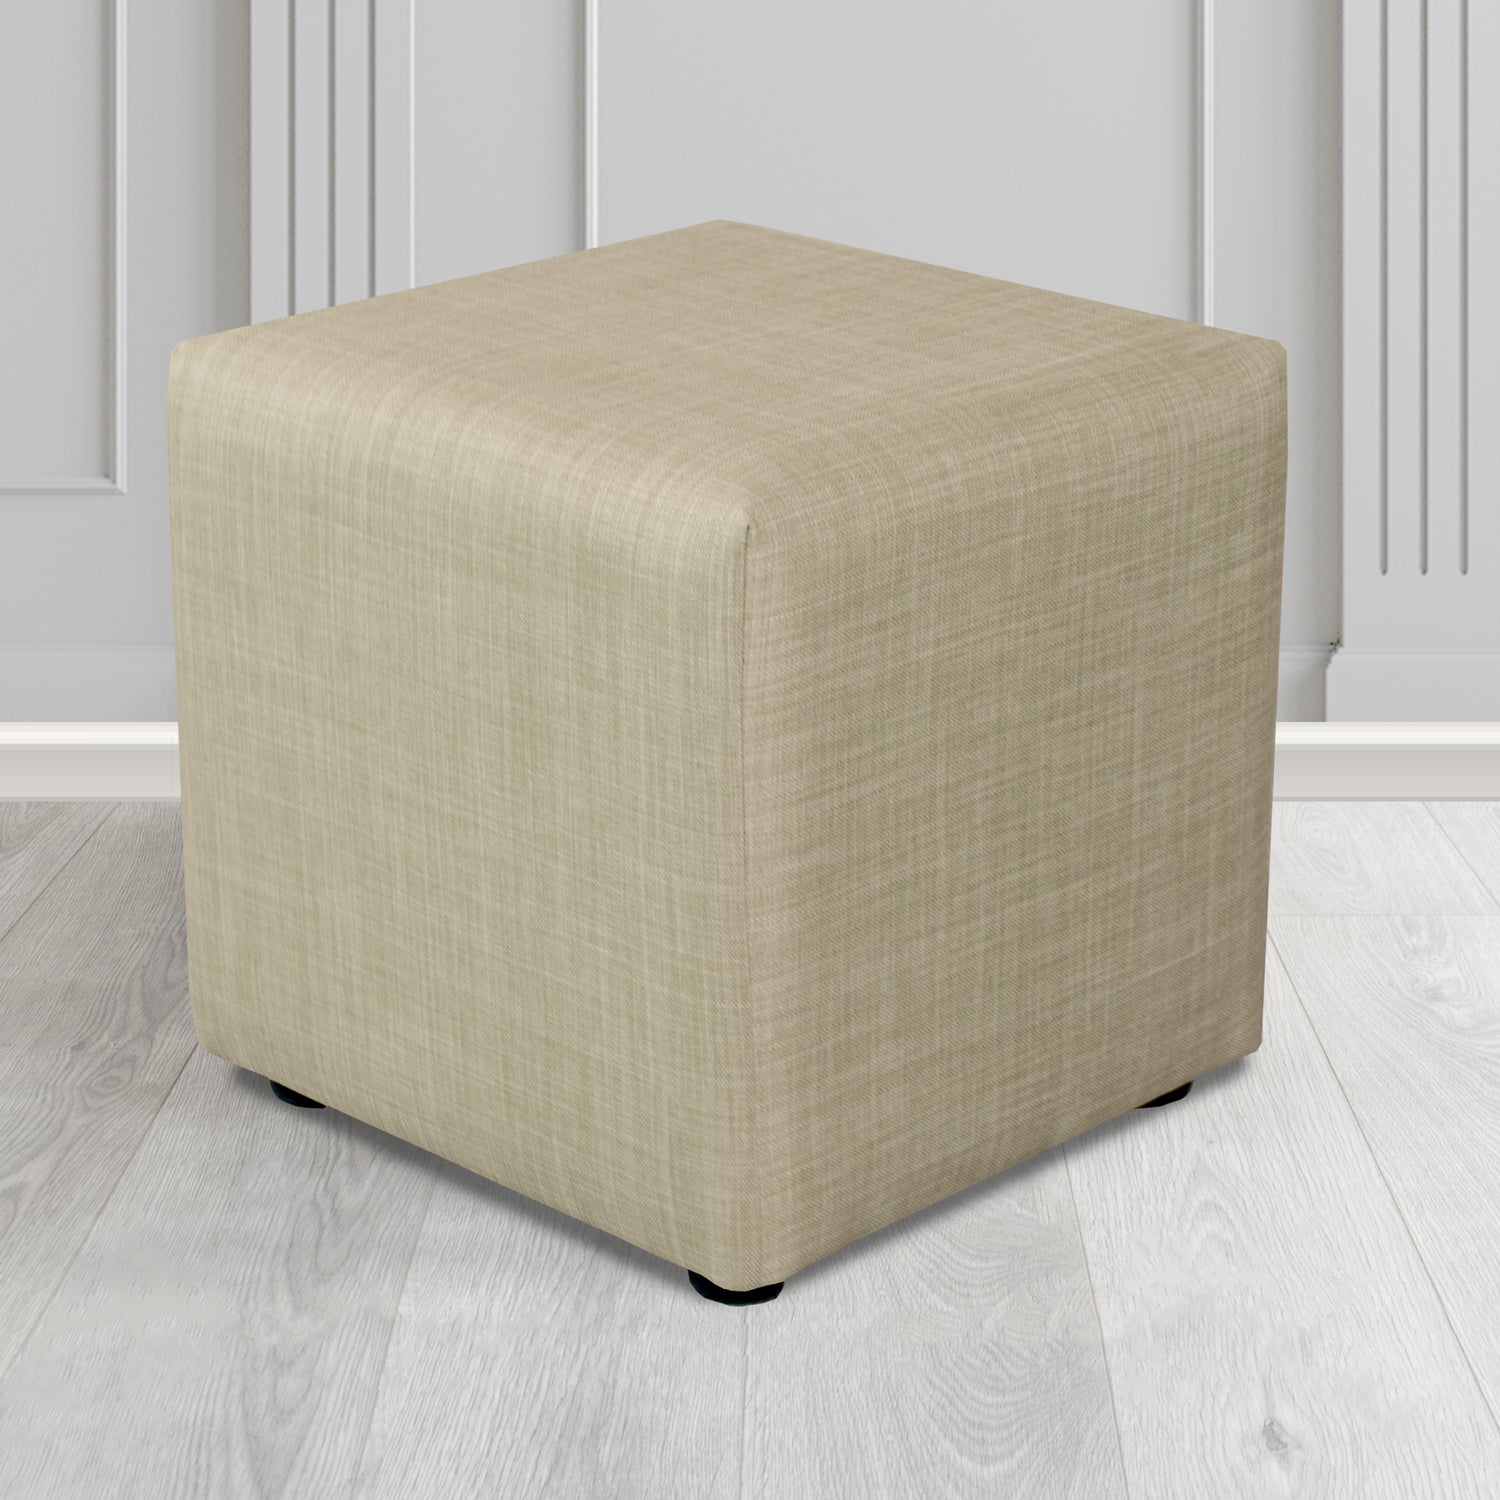 Paris Charles Fudge Plain Linen Fabric Cube Footstool - The Tub Chair Shop